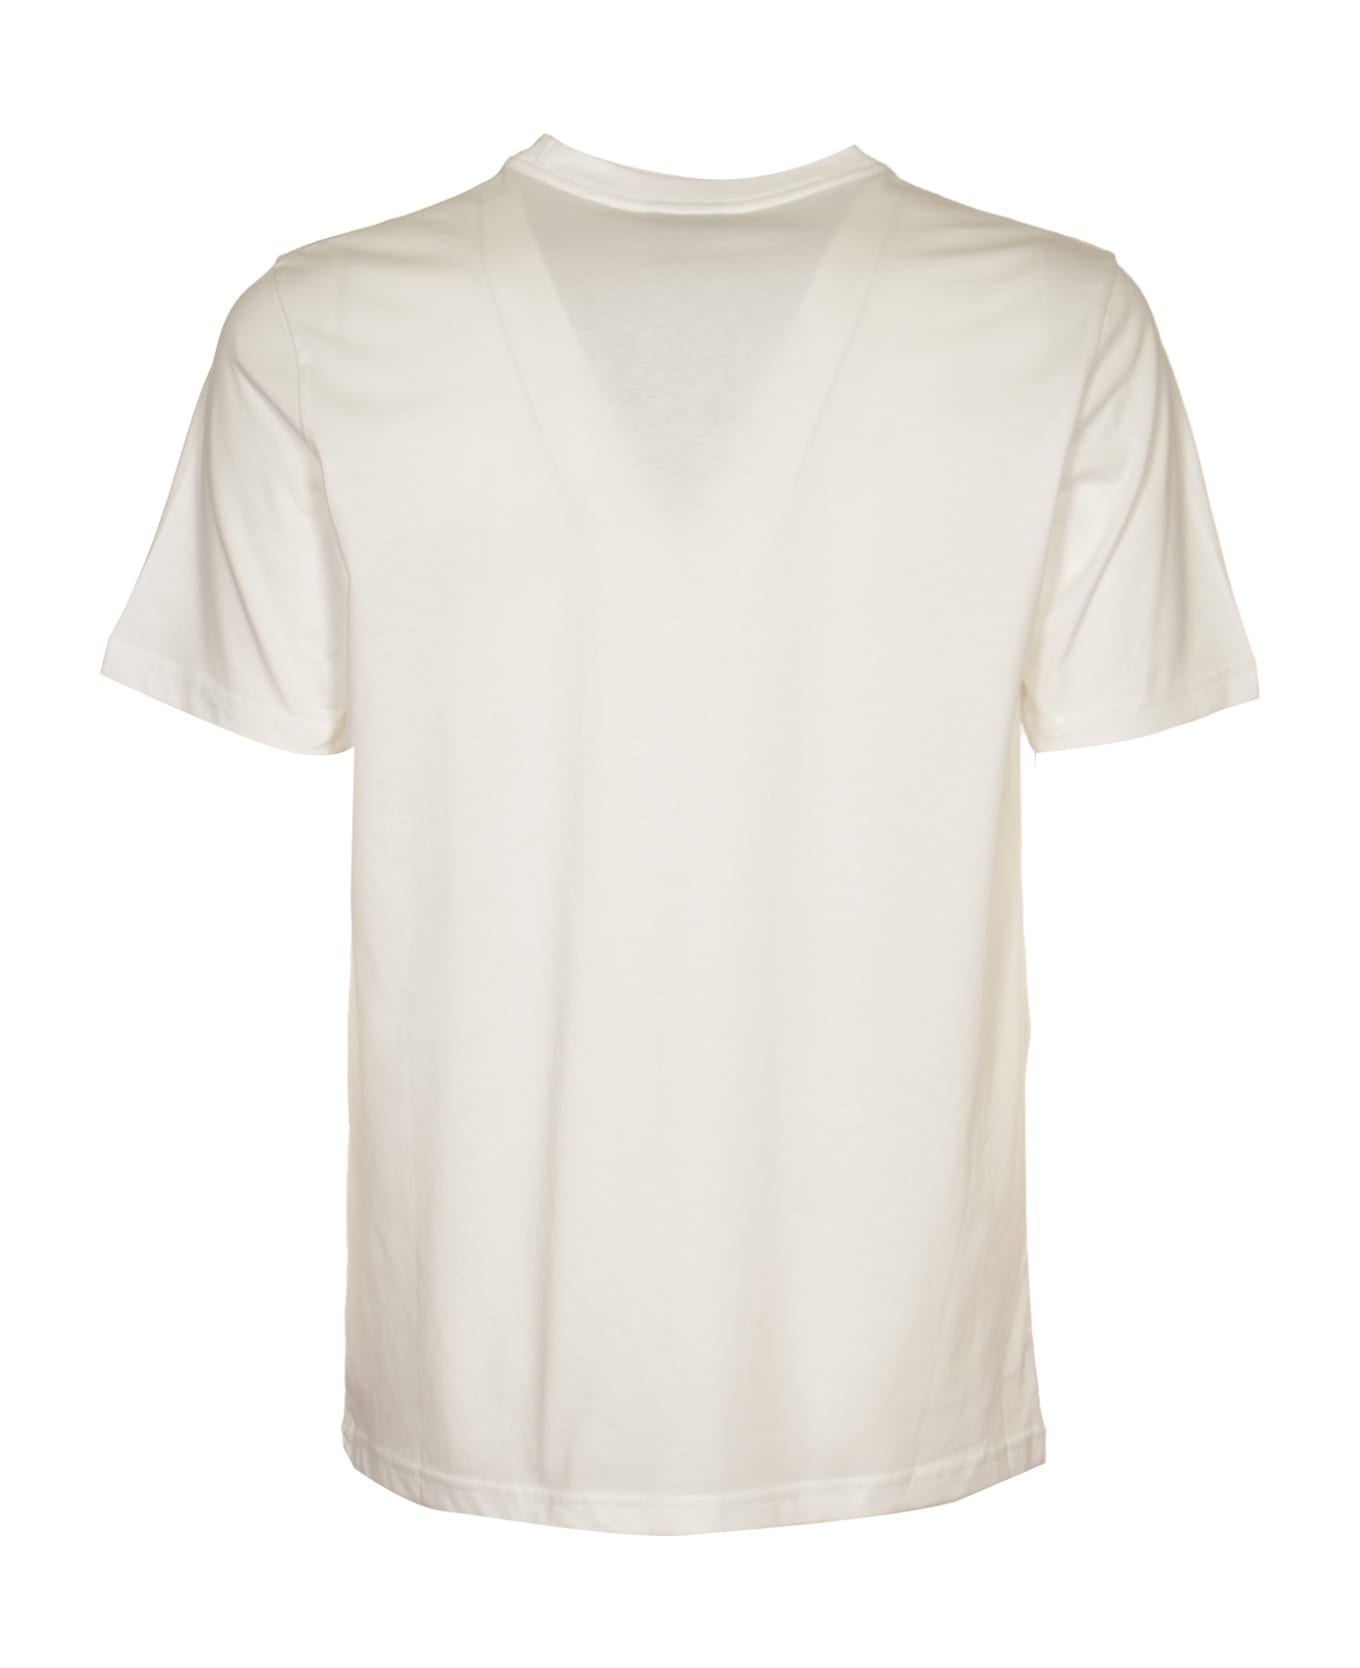 Paul Smith Teddy T-shirt - White